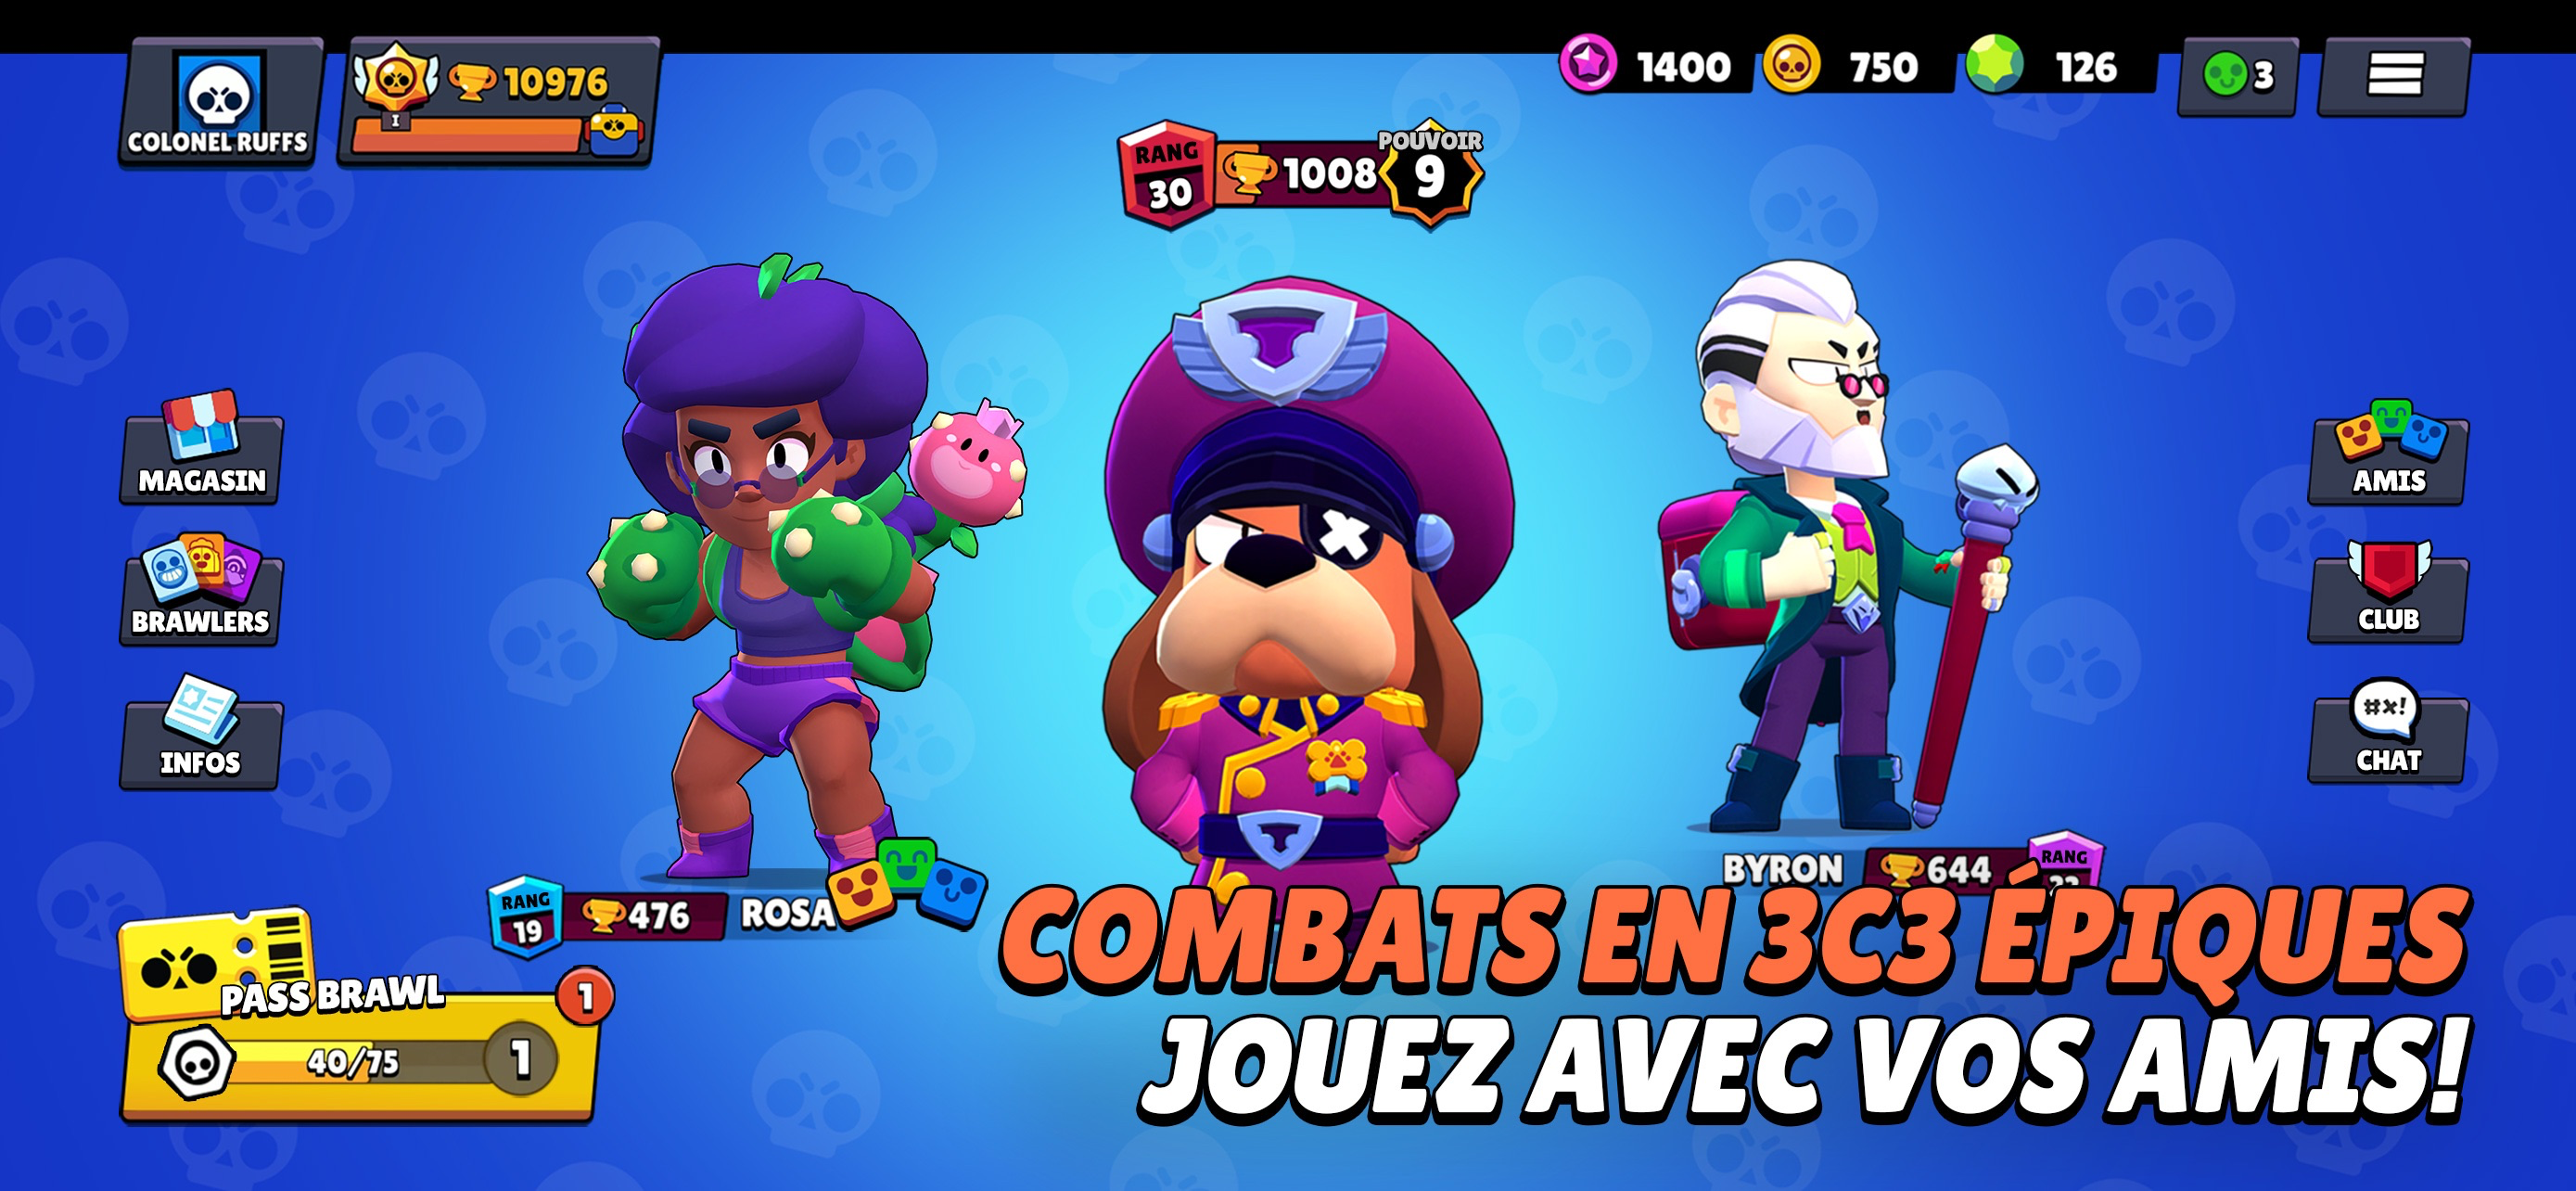 Brawl Stars Overview Apple App Store France - mode de jeu brawl star en anglais